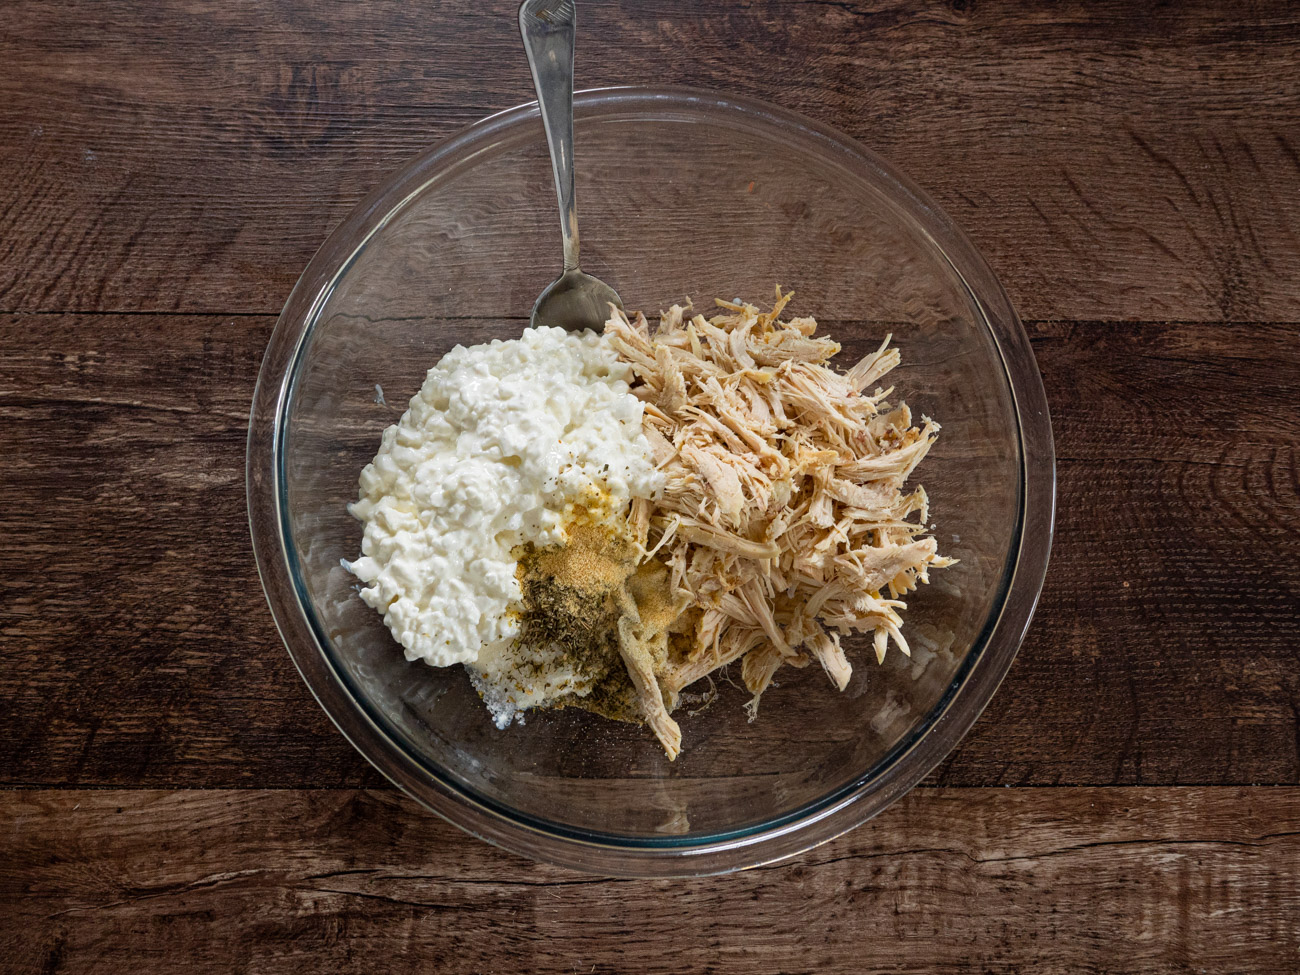 Combine shredded chicken, cottage cheese, salt, onion powder, garlic powder, and Italian seasoning in a large bowl.